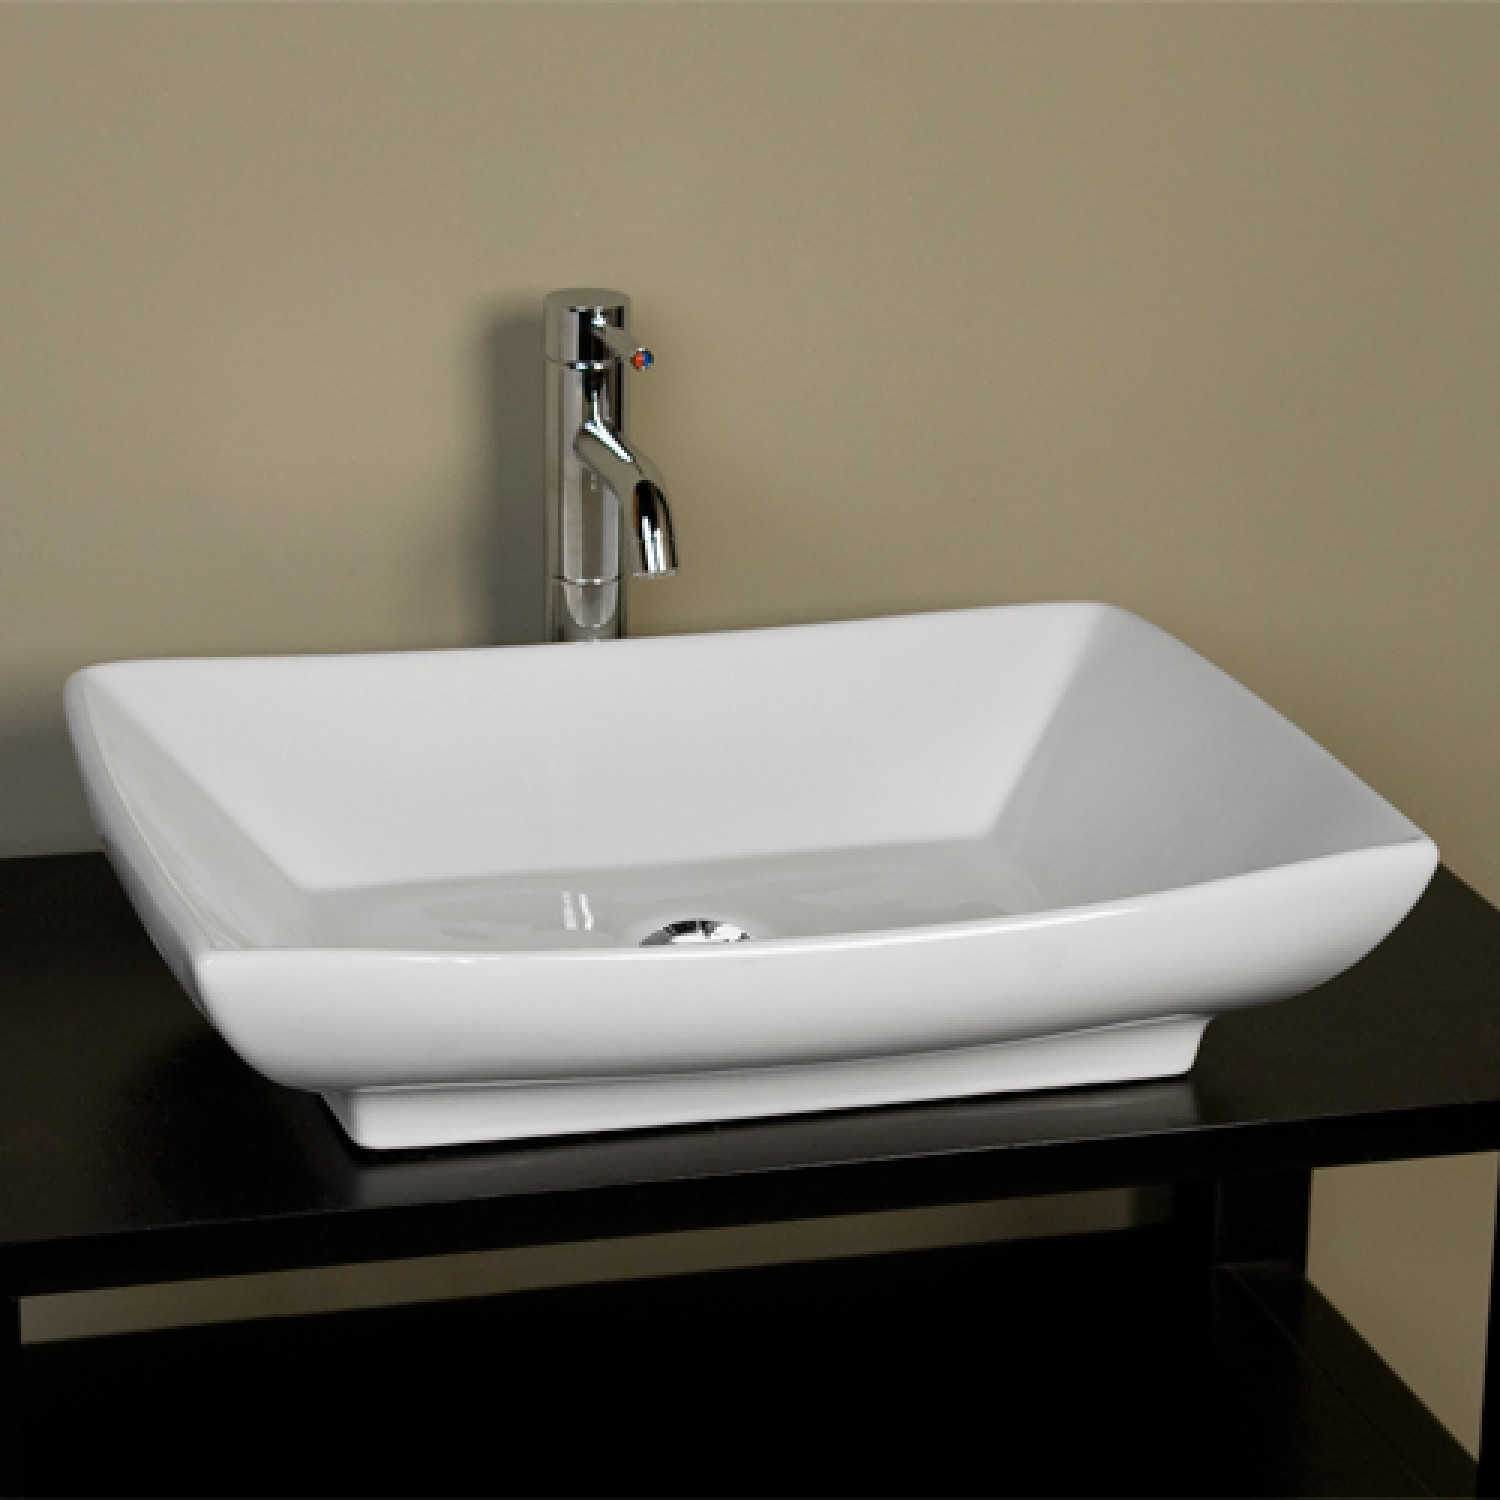 Best ideas about Vessel Bathroom Sinks
. Save or Pin Mollie Rectangular Porcelain Vessel Sink Bathroom Now.